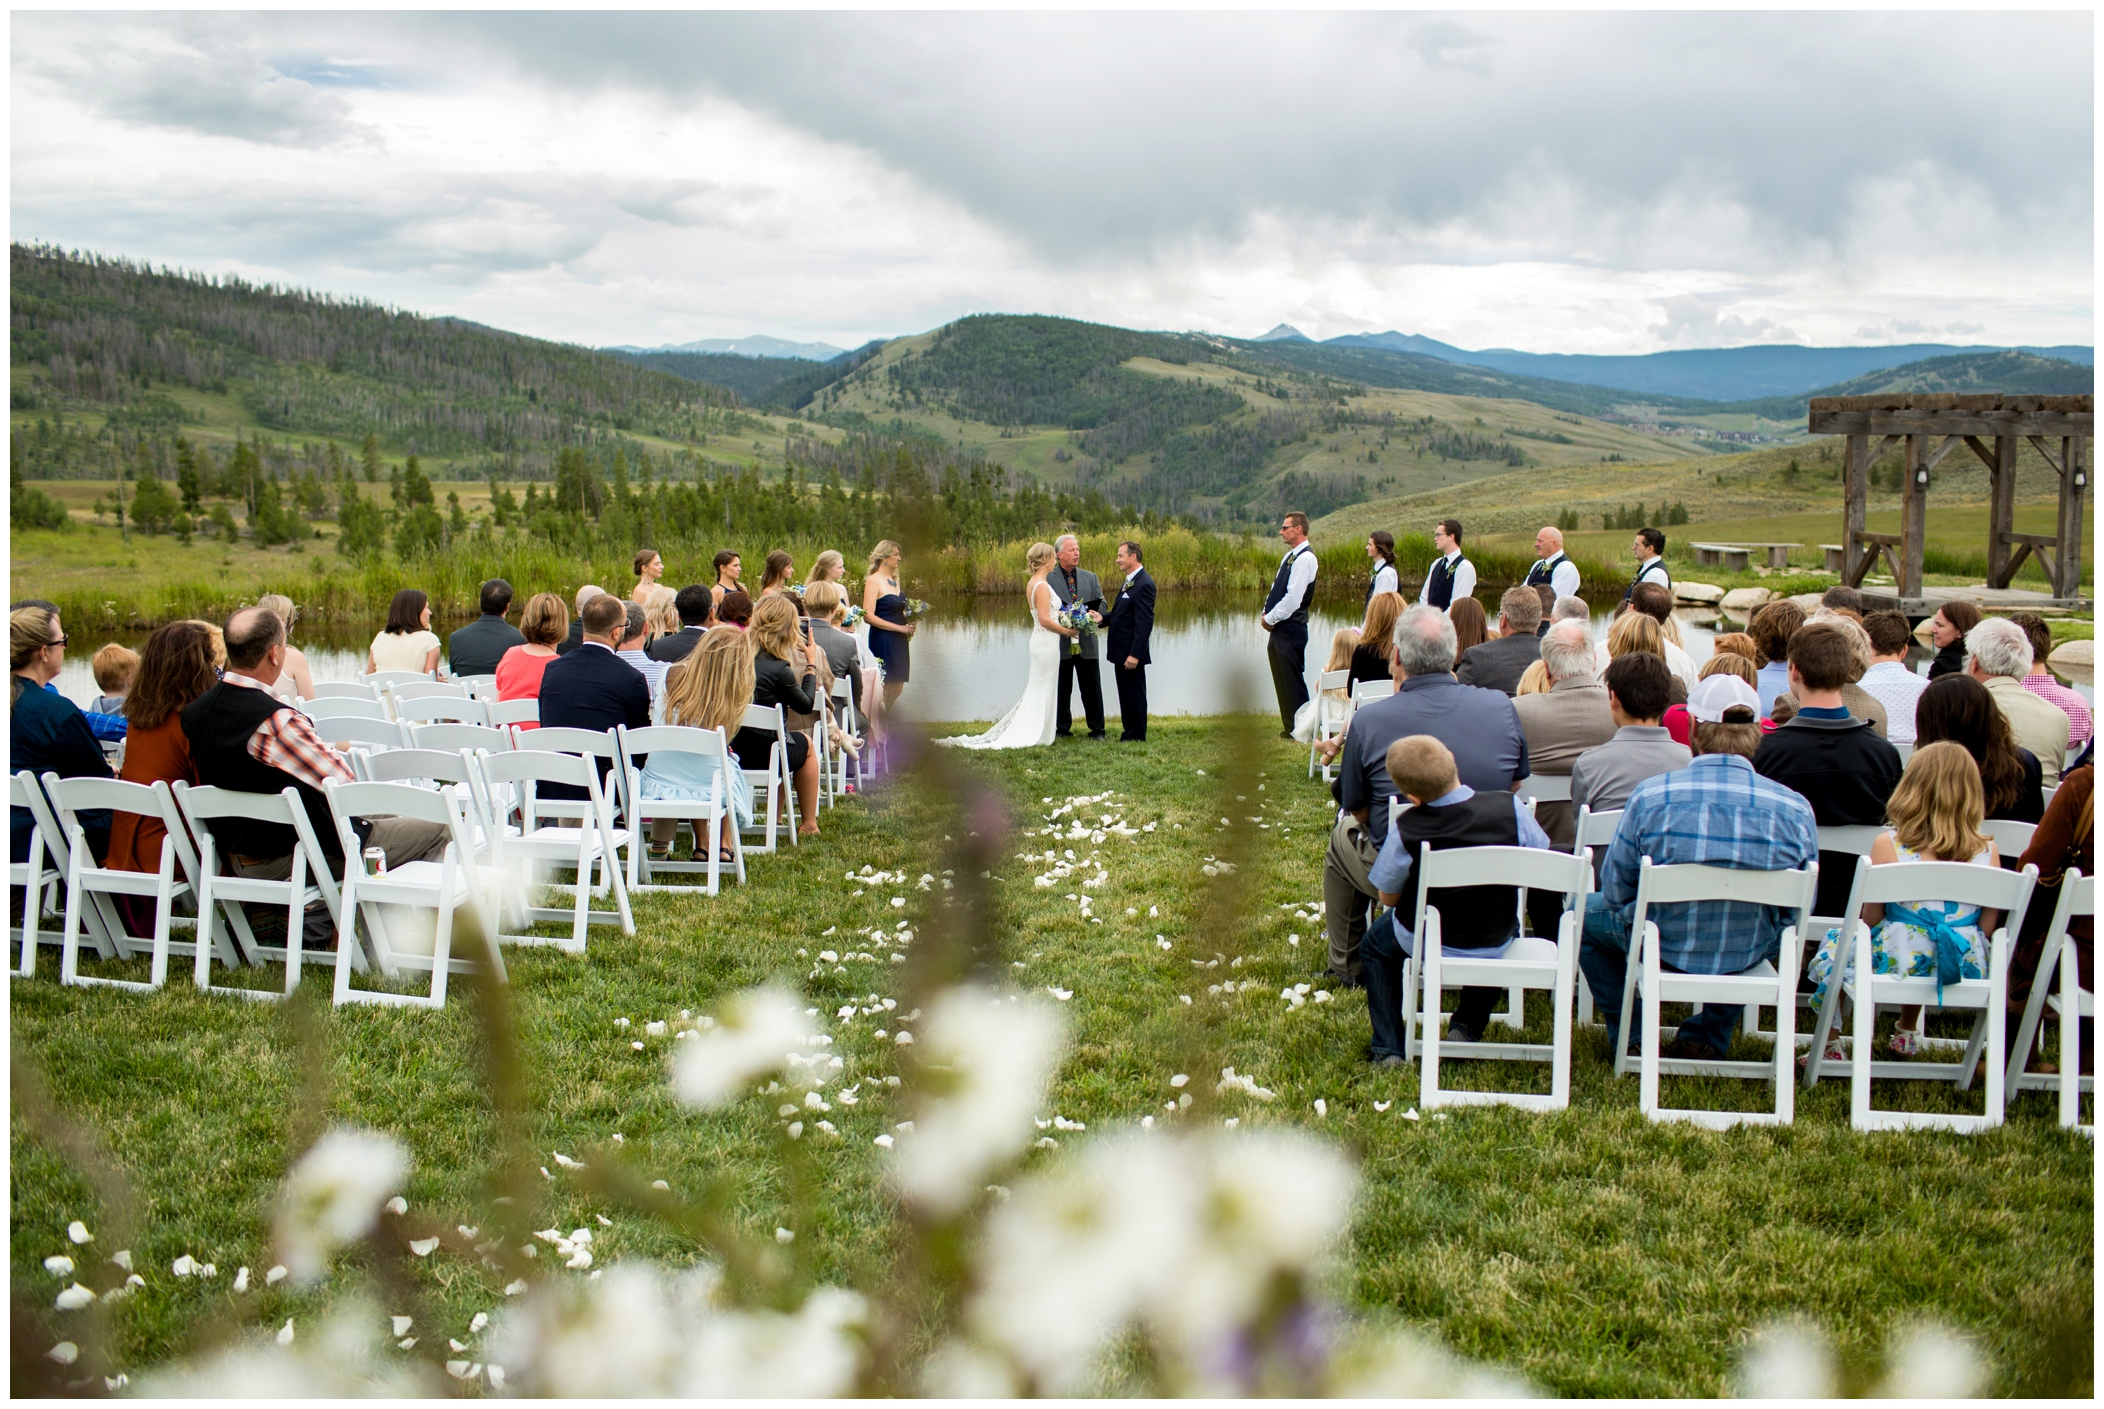 Strawberry Creek Ranch wedding photos by Colorado mountain photographer Plum Pretty Photography 